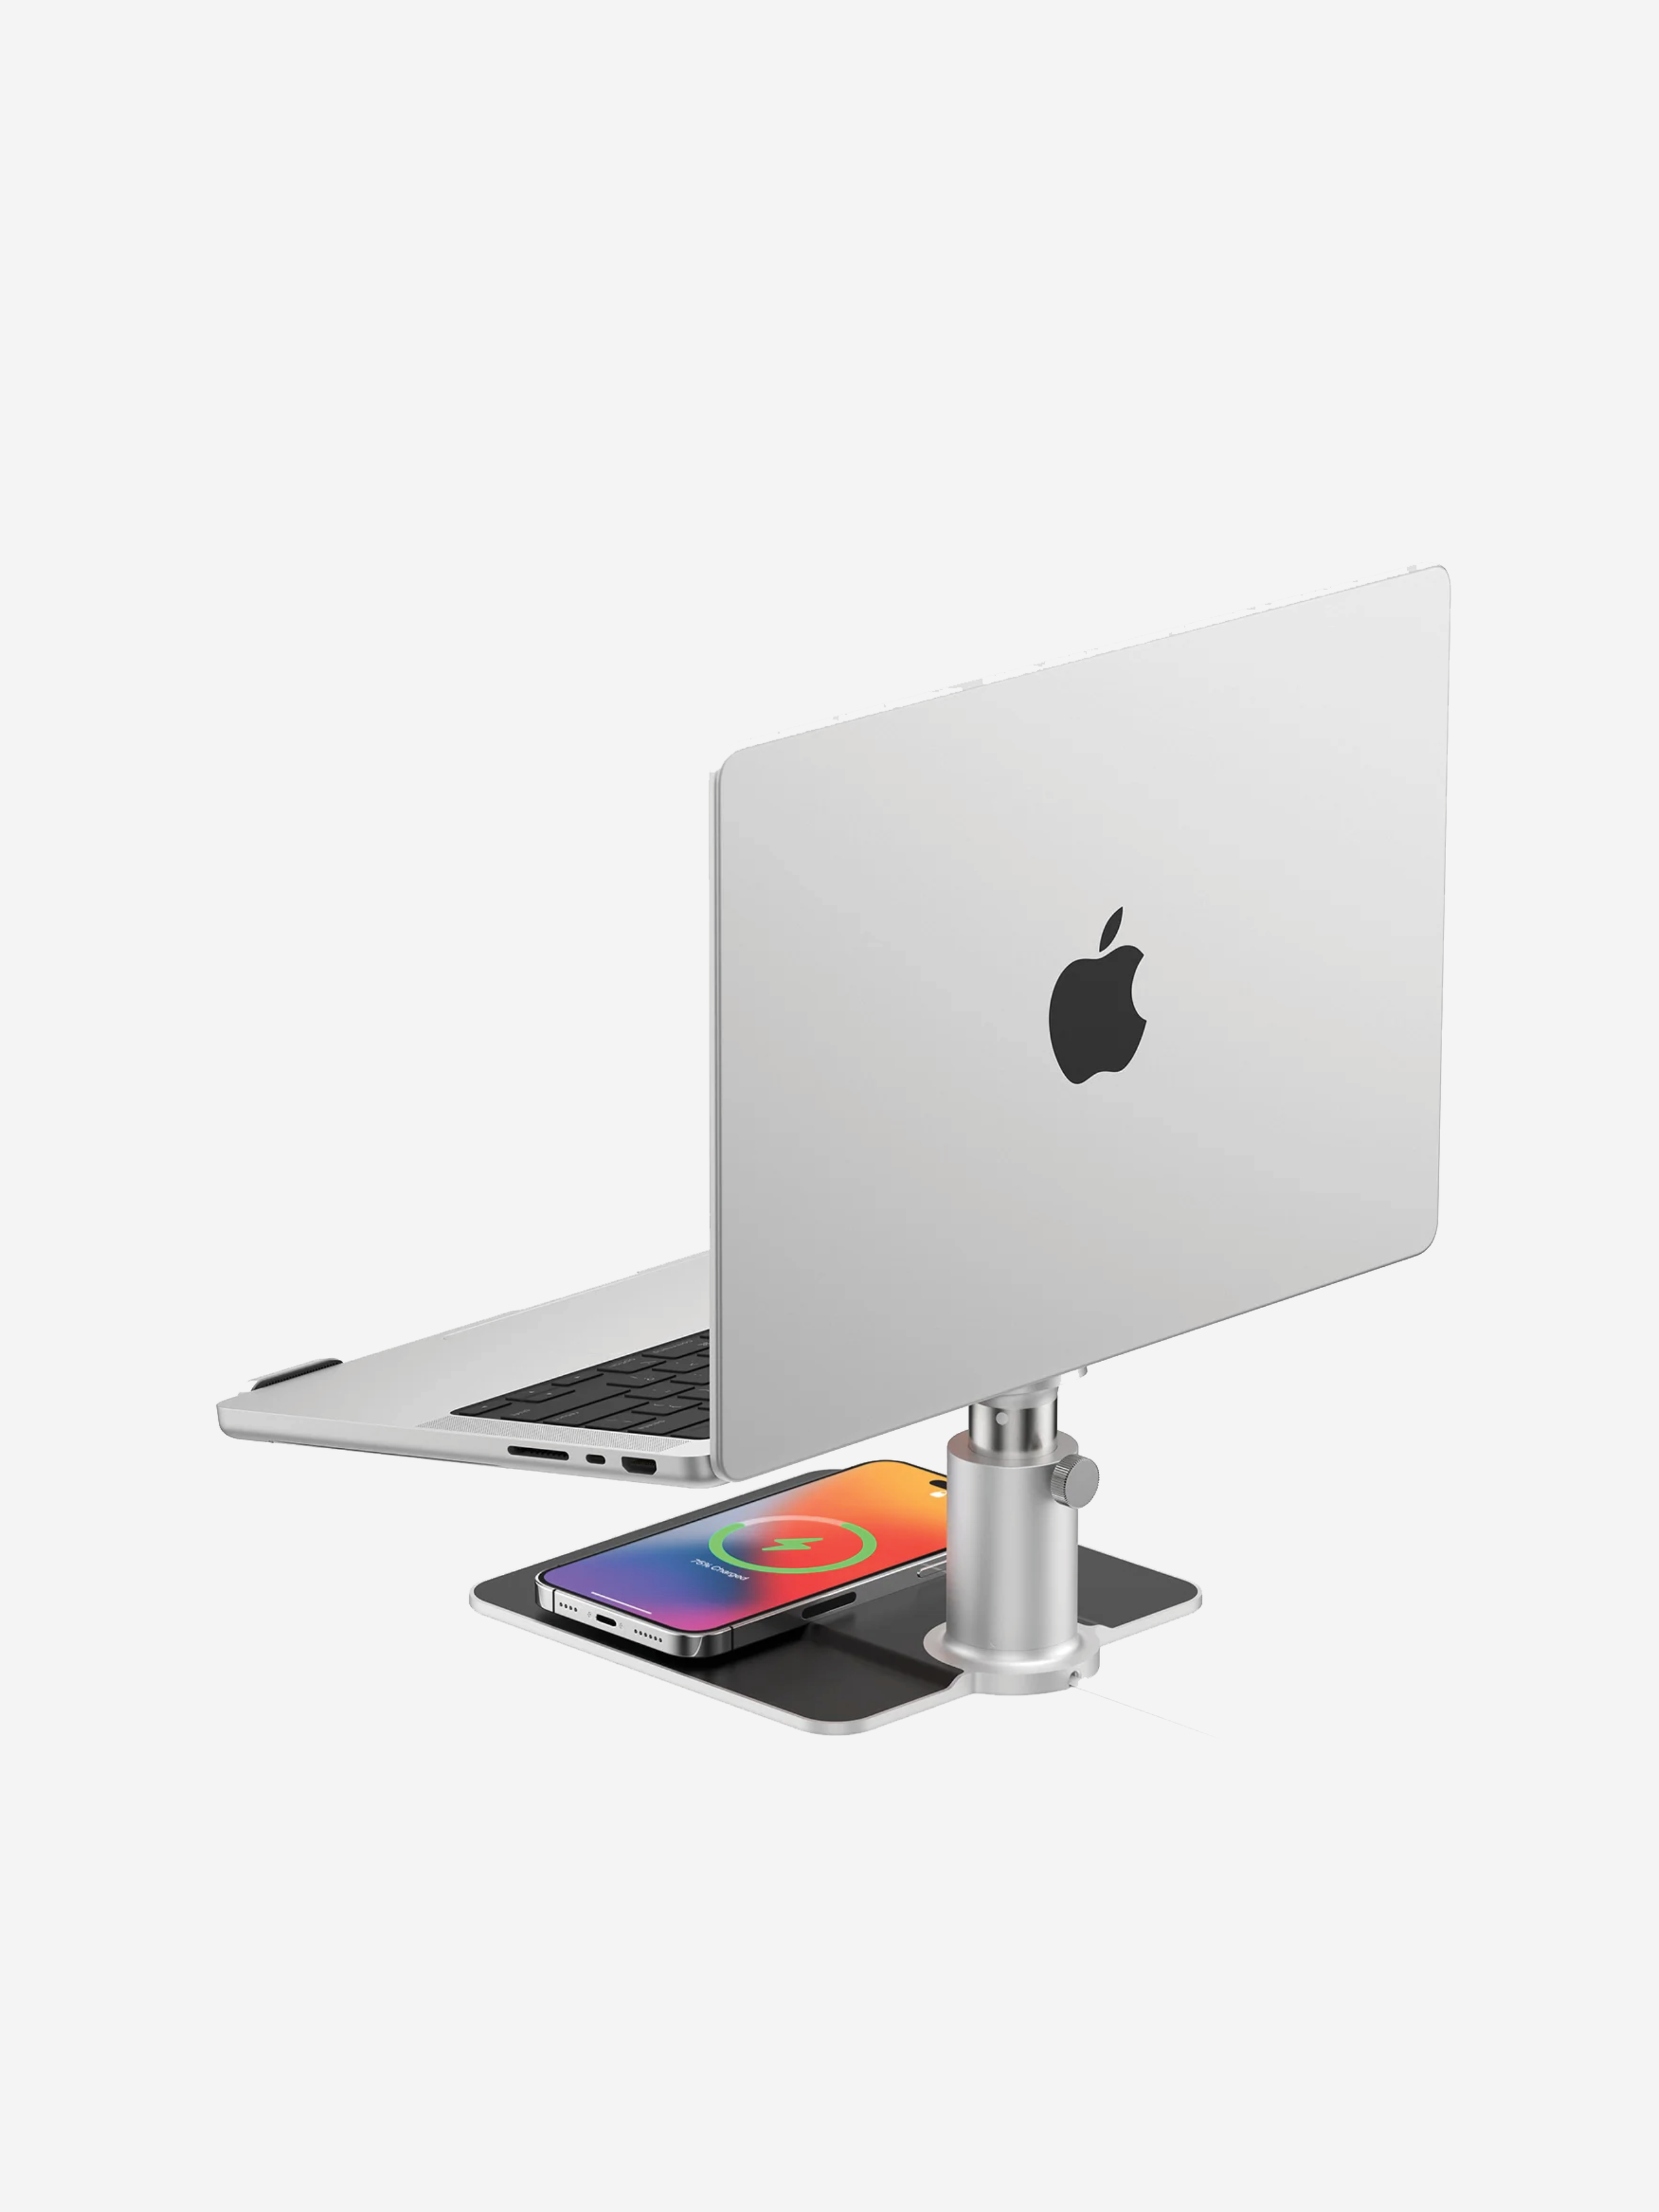 MacBook stand